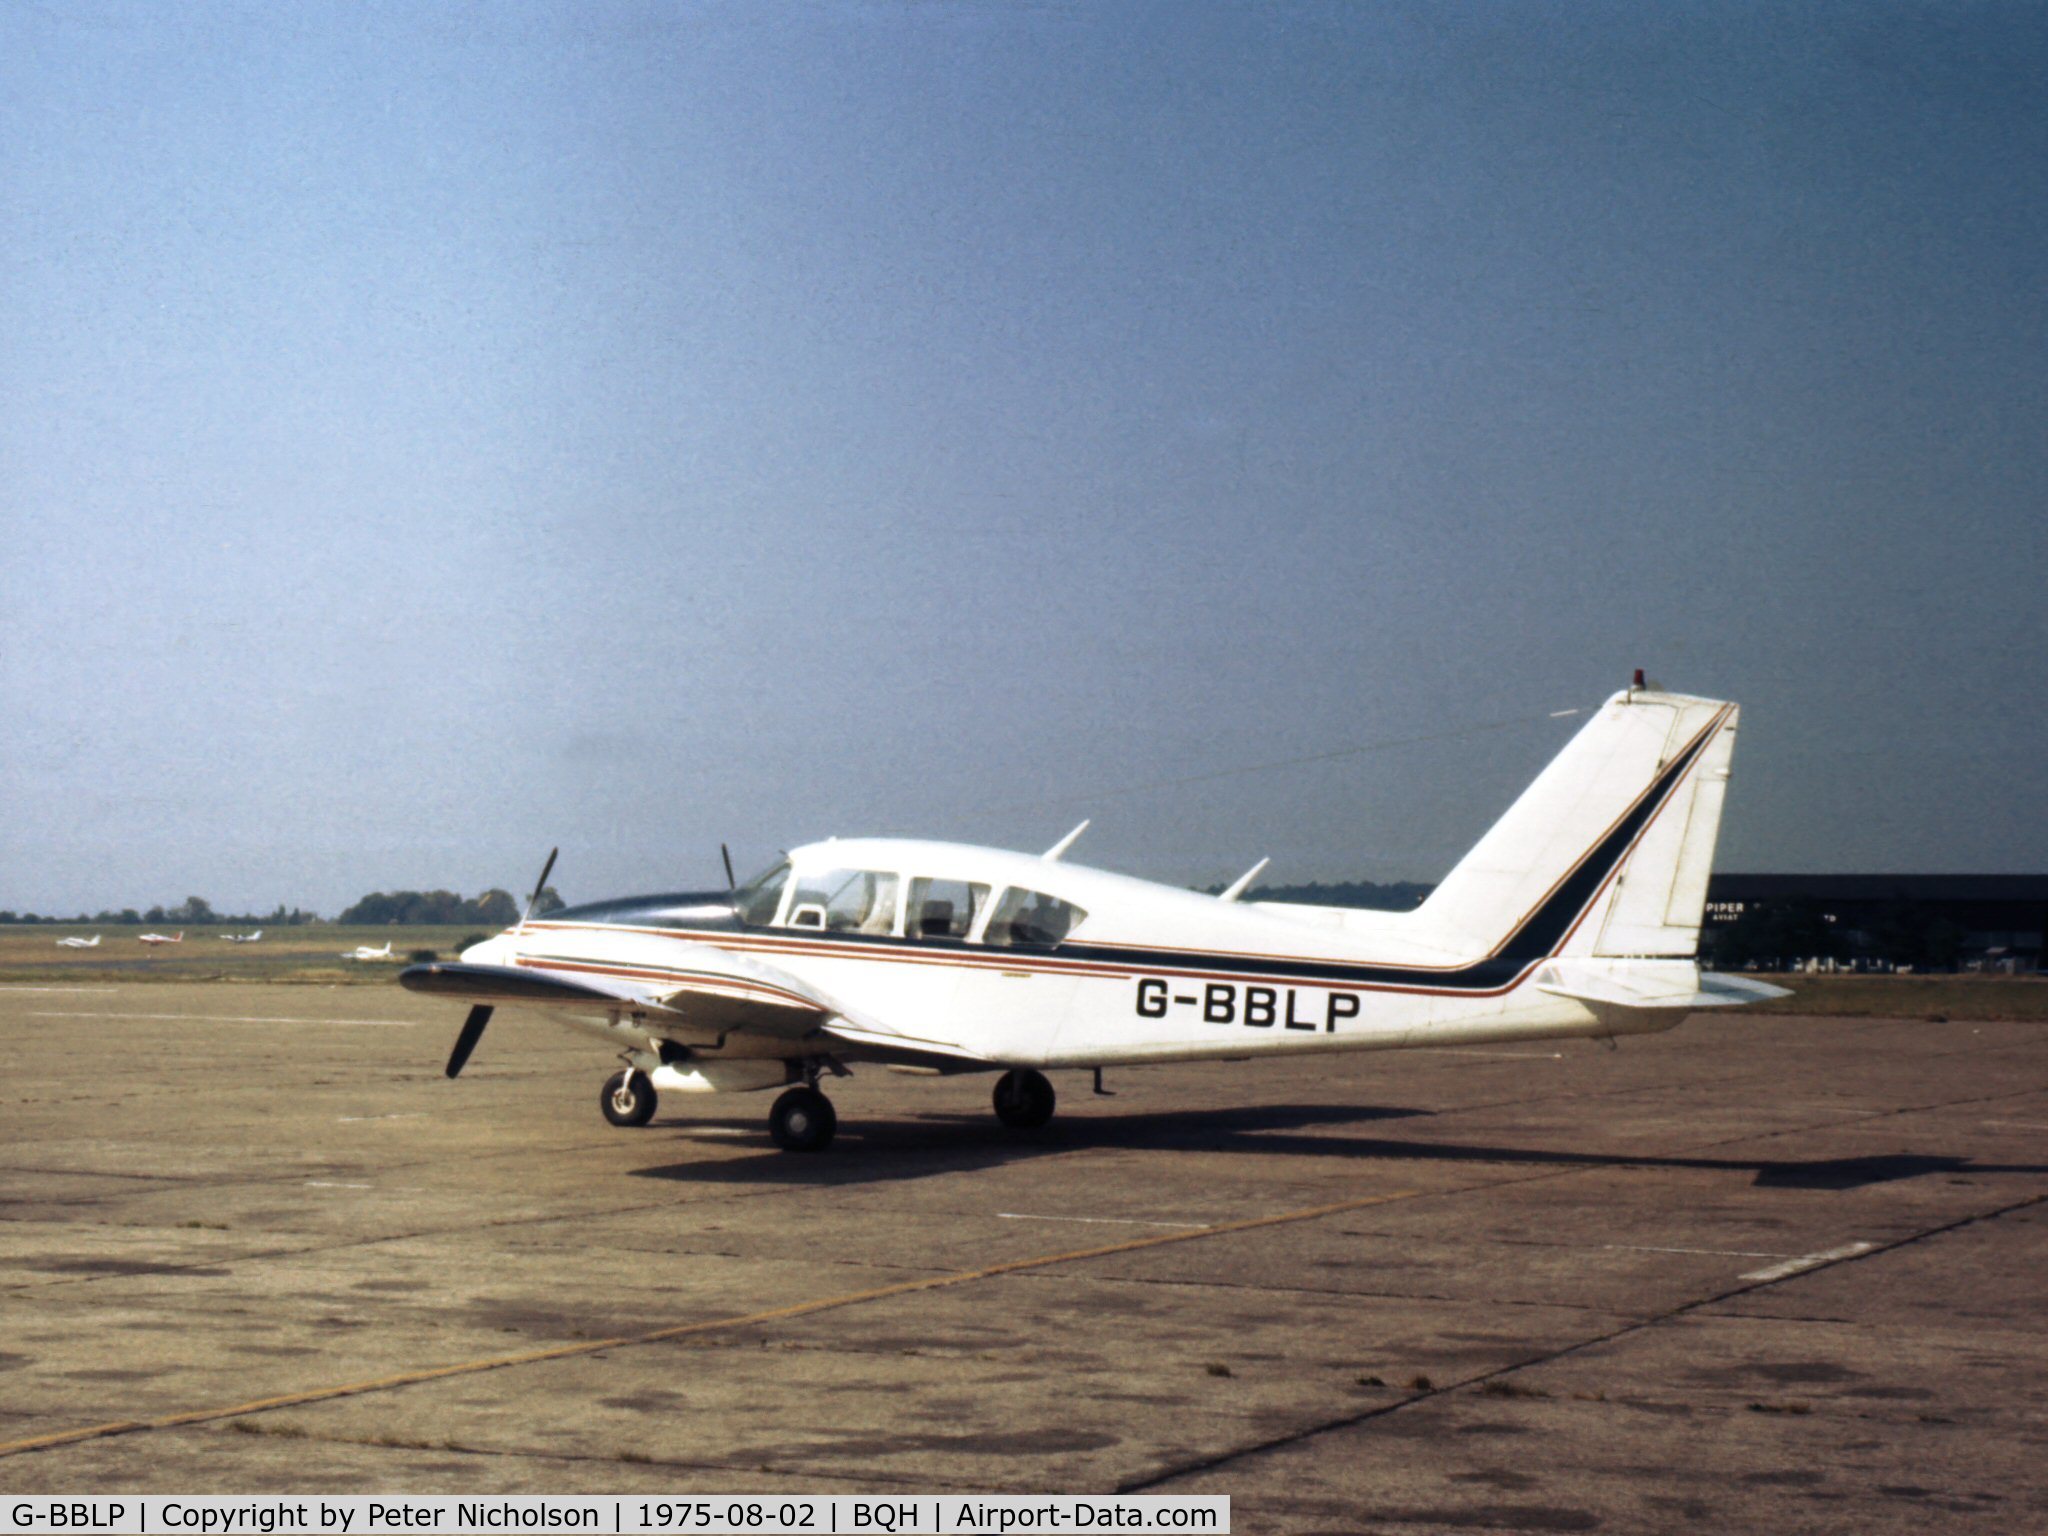 G-BBLP, 1969 Piper PA-23-250 Aztec C/N 27-4136, PA-23 Aztec D seen at Biggin Hill in the Summer of 1975.